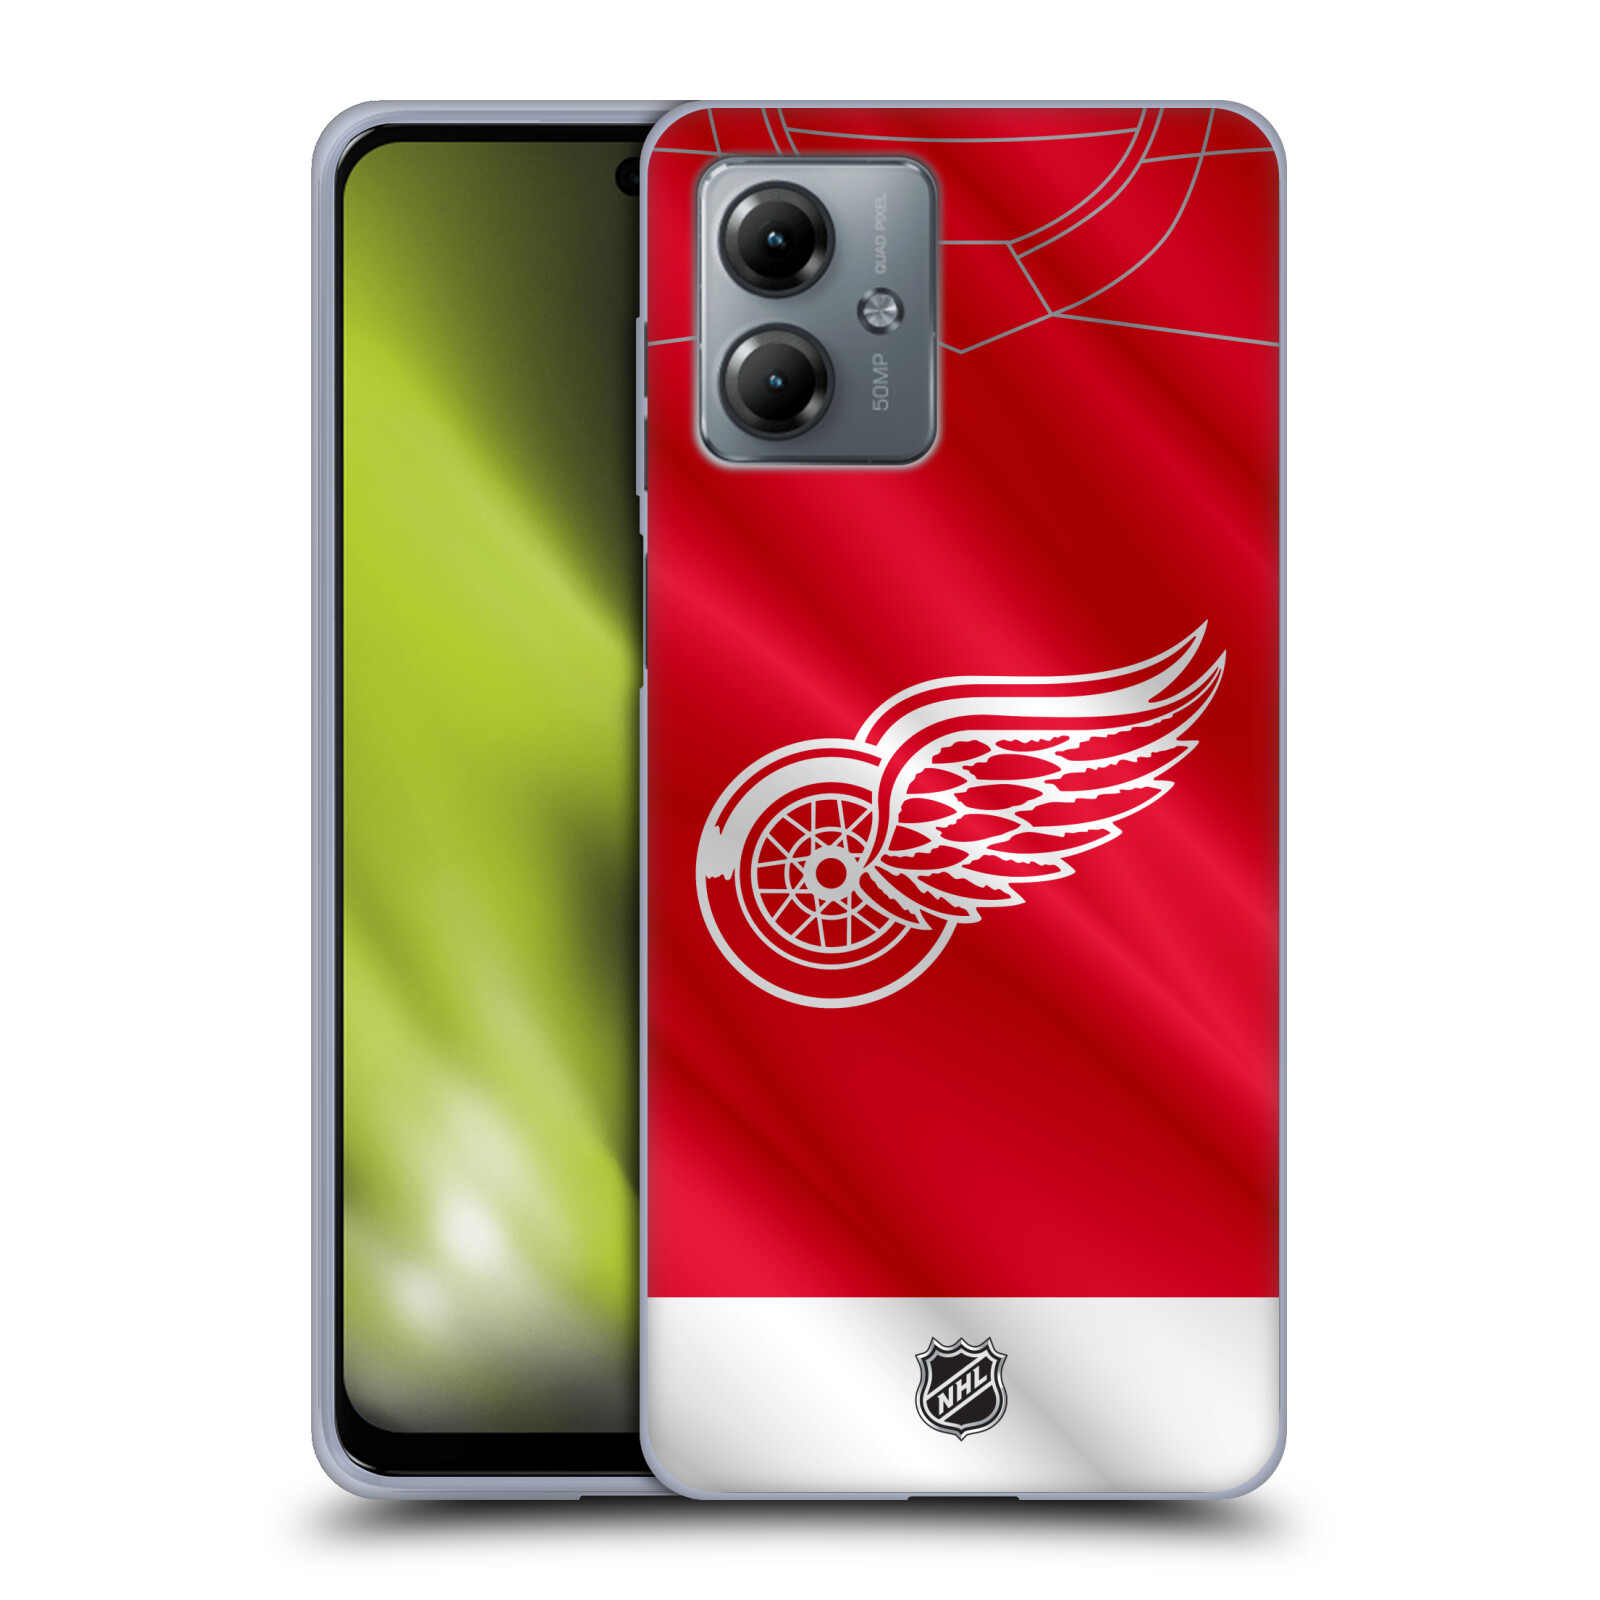 Silikonové pouzdro na mobil Motorola Moto G14 - NHL - Dres Detroit Red Wings (Silikonový kryt, obal, pouzdro na mobilní telefon Motorola Moto G14 s licencovaným motivem NHL - Dres Detroit Red Wings)